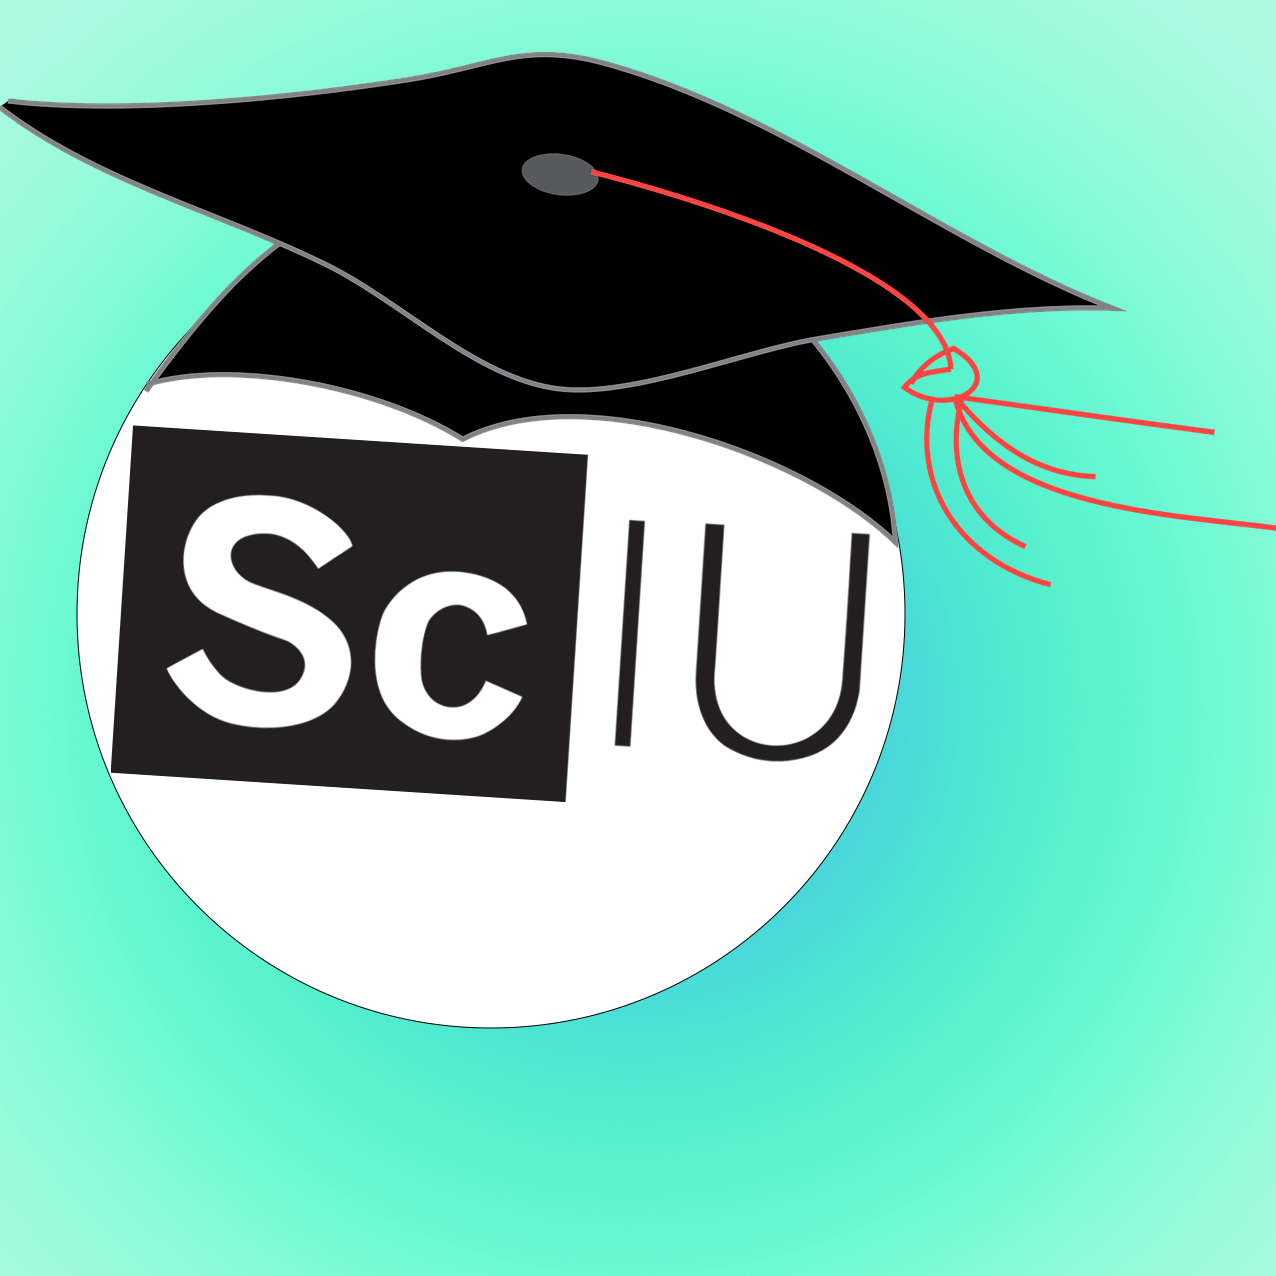 ScIU logo wearing a graduation cap against a green background